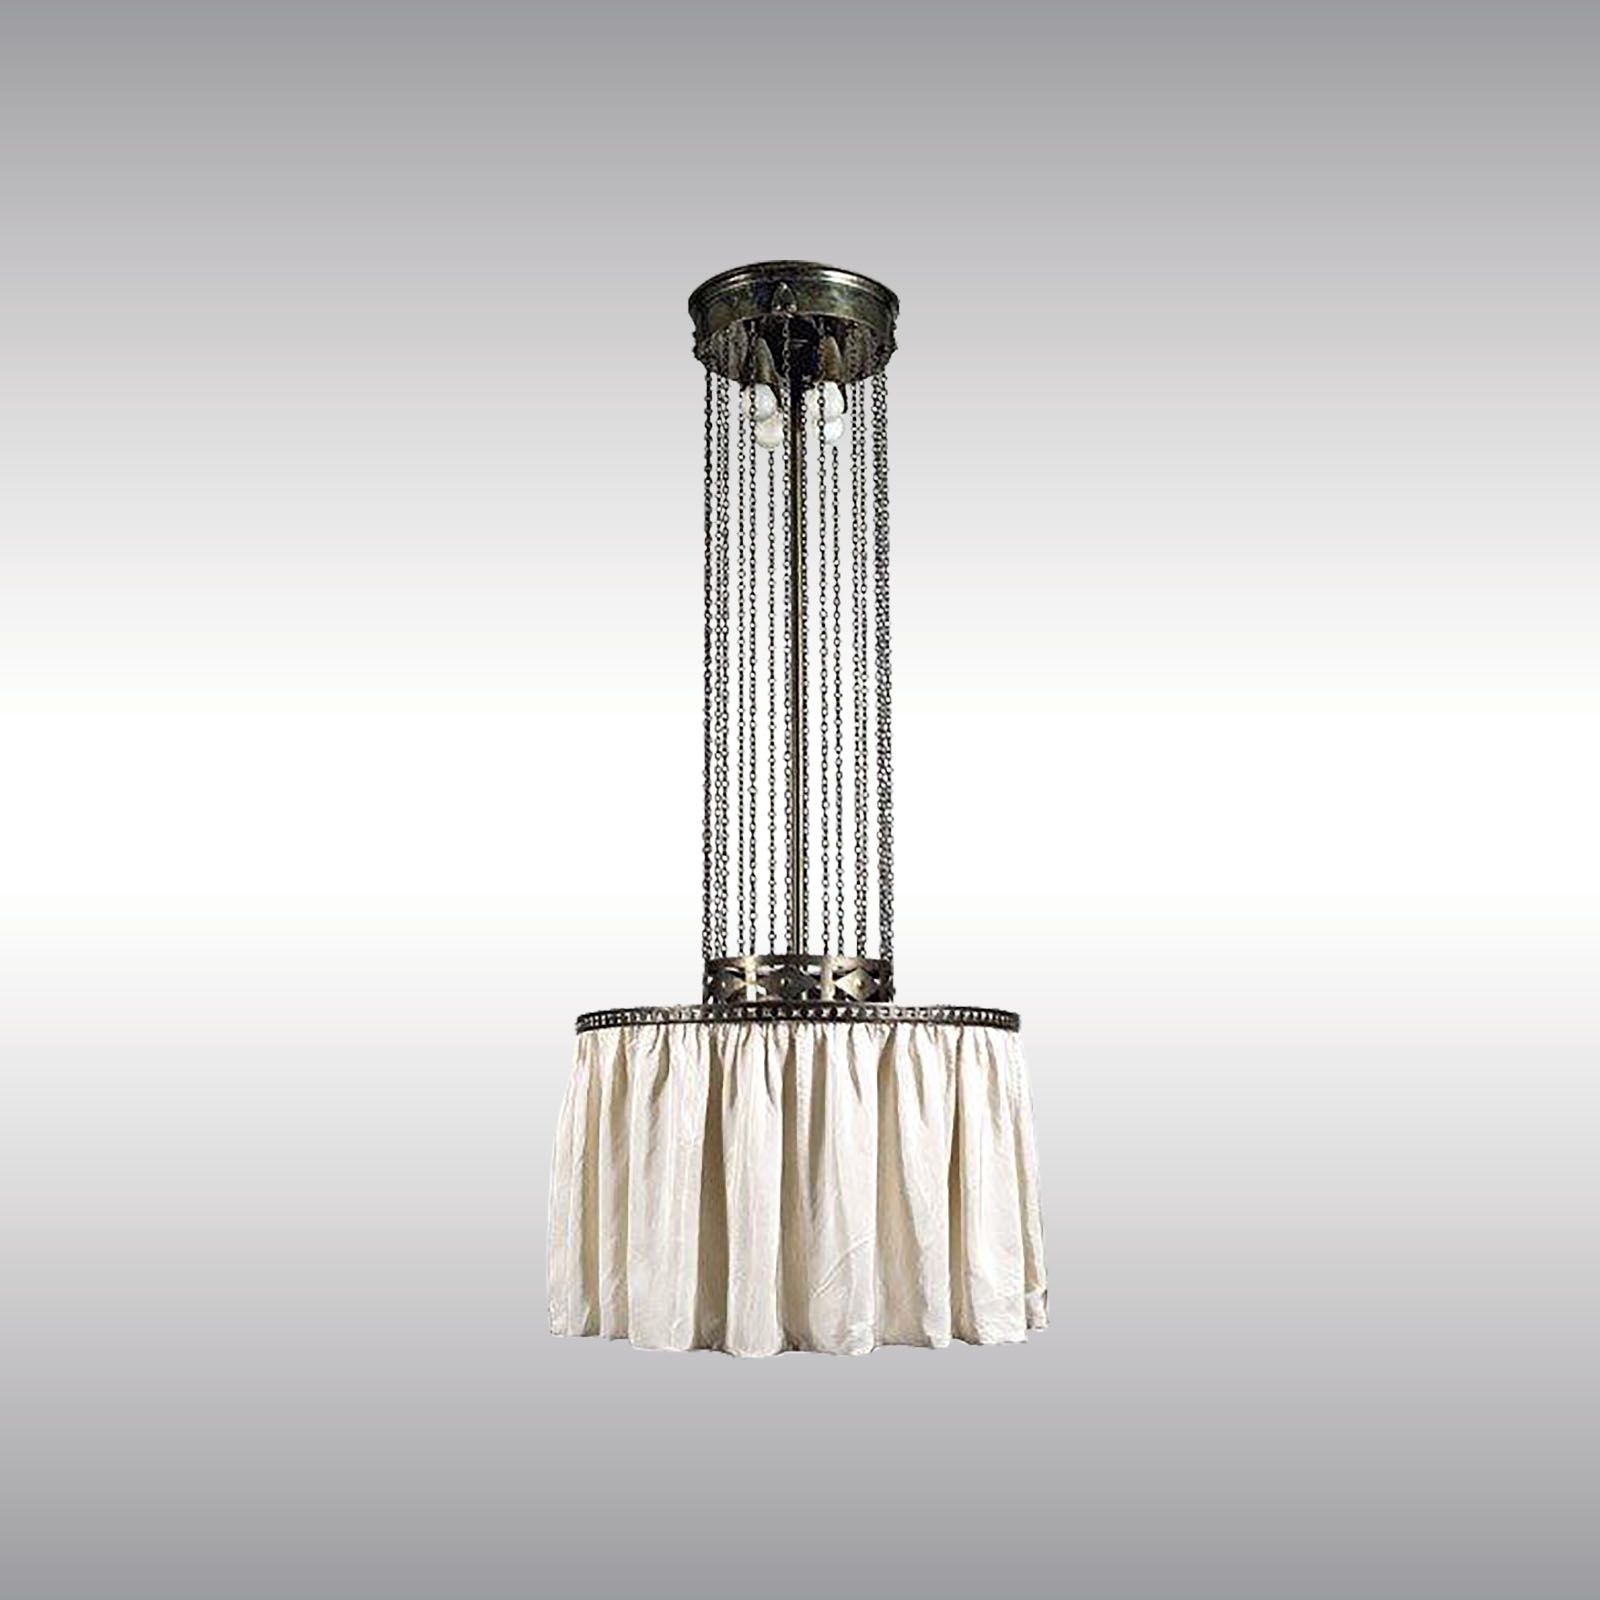 WOKA LAMPS VIENNA - OrderNr.: 21208|Moldauer Luster - Design: Josef Hoffmann